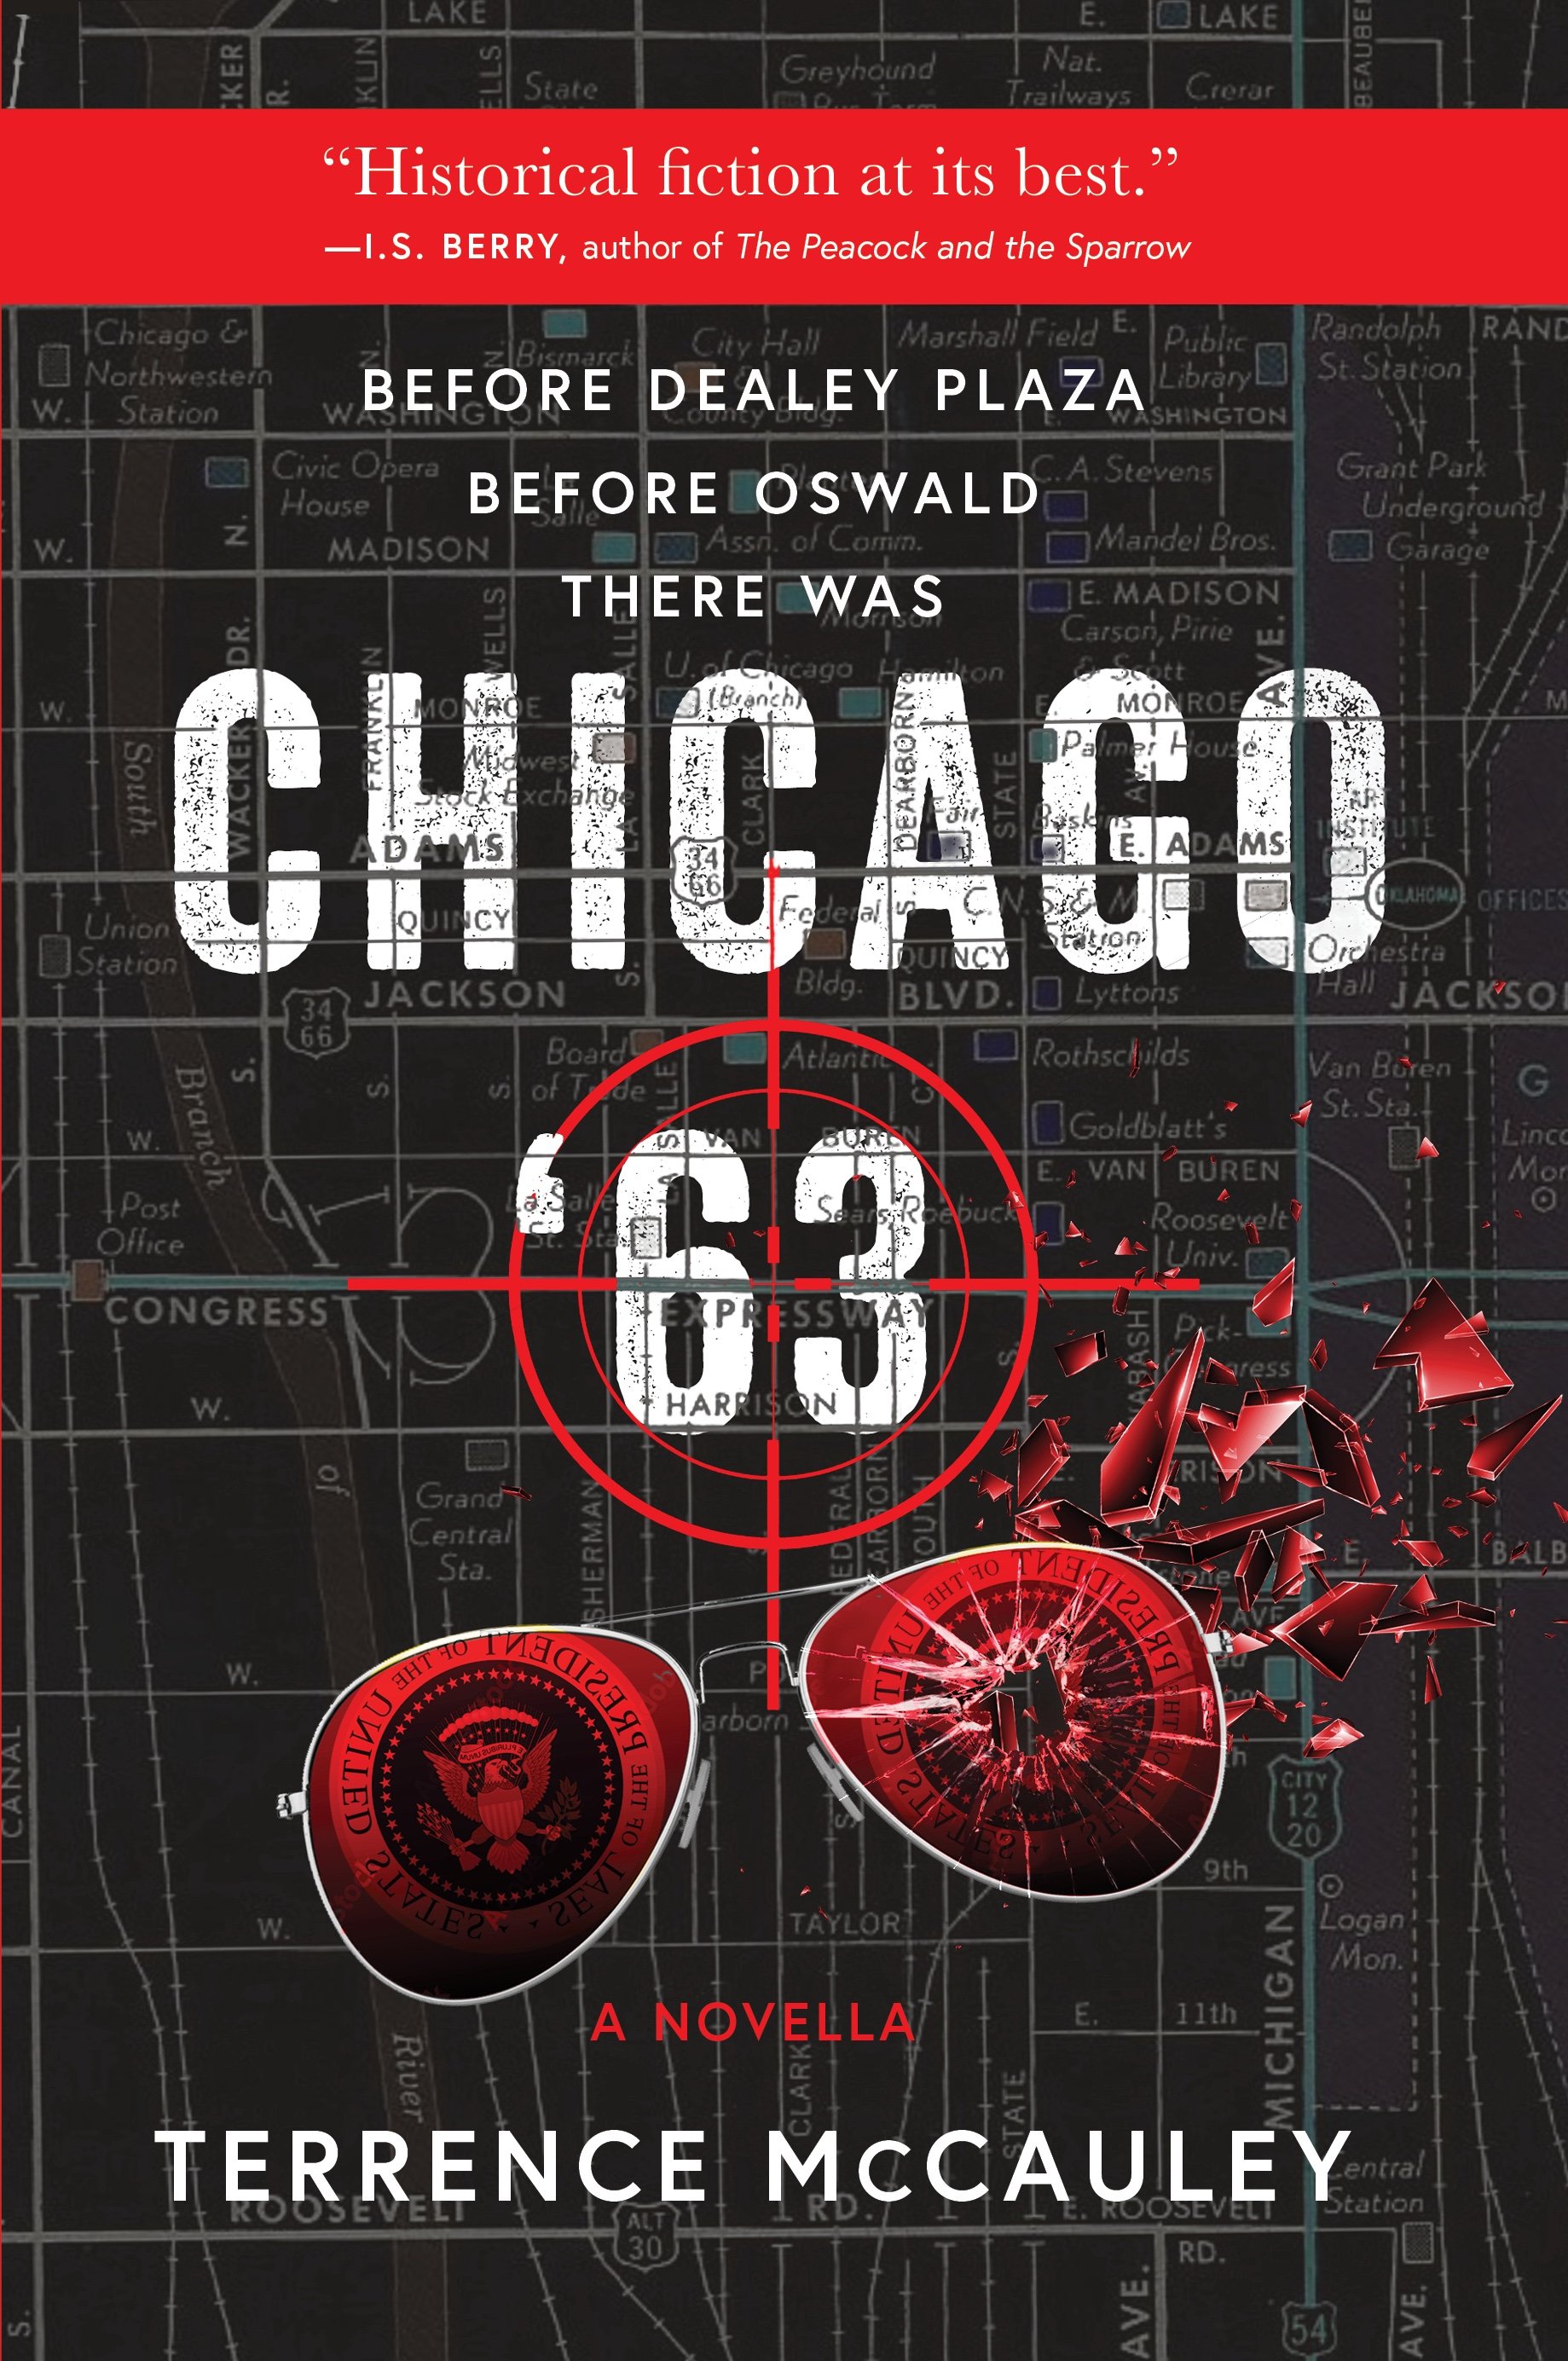   Chicago ‘63  A Novella  Learn More! 